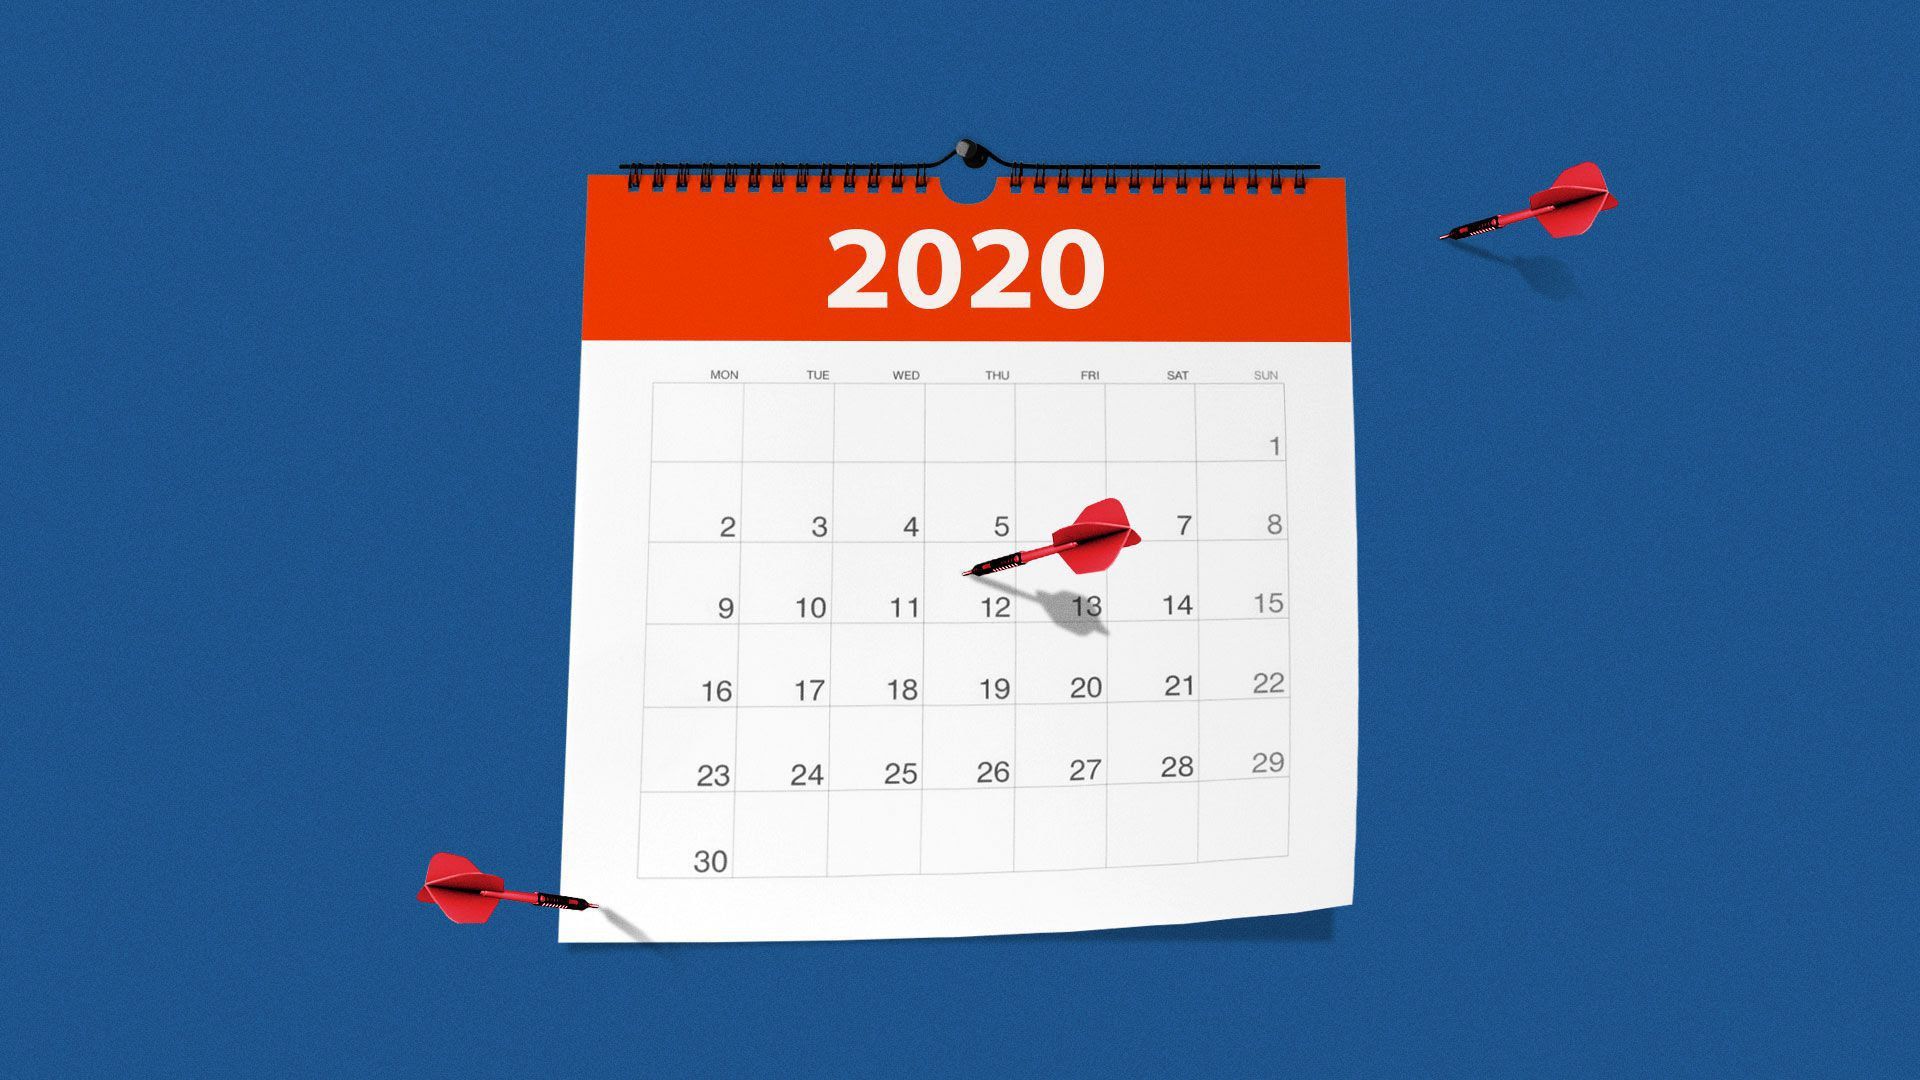 Illustration of darts on a 2020 calendar